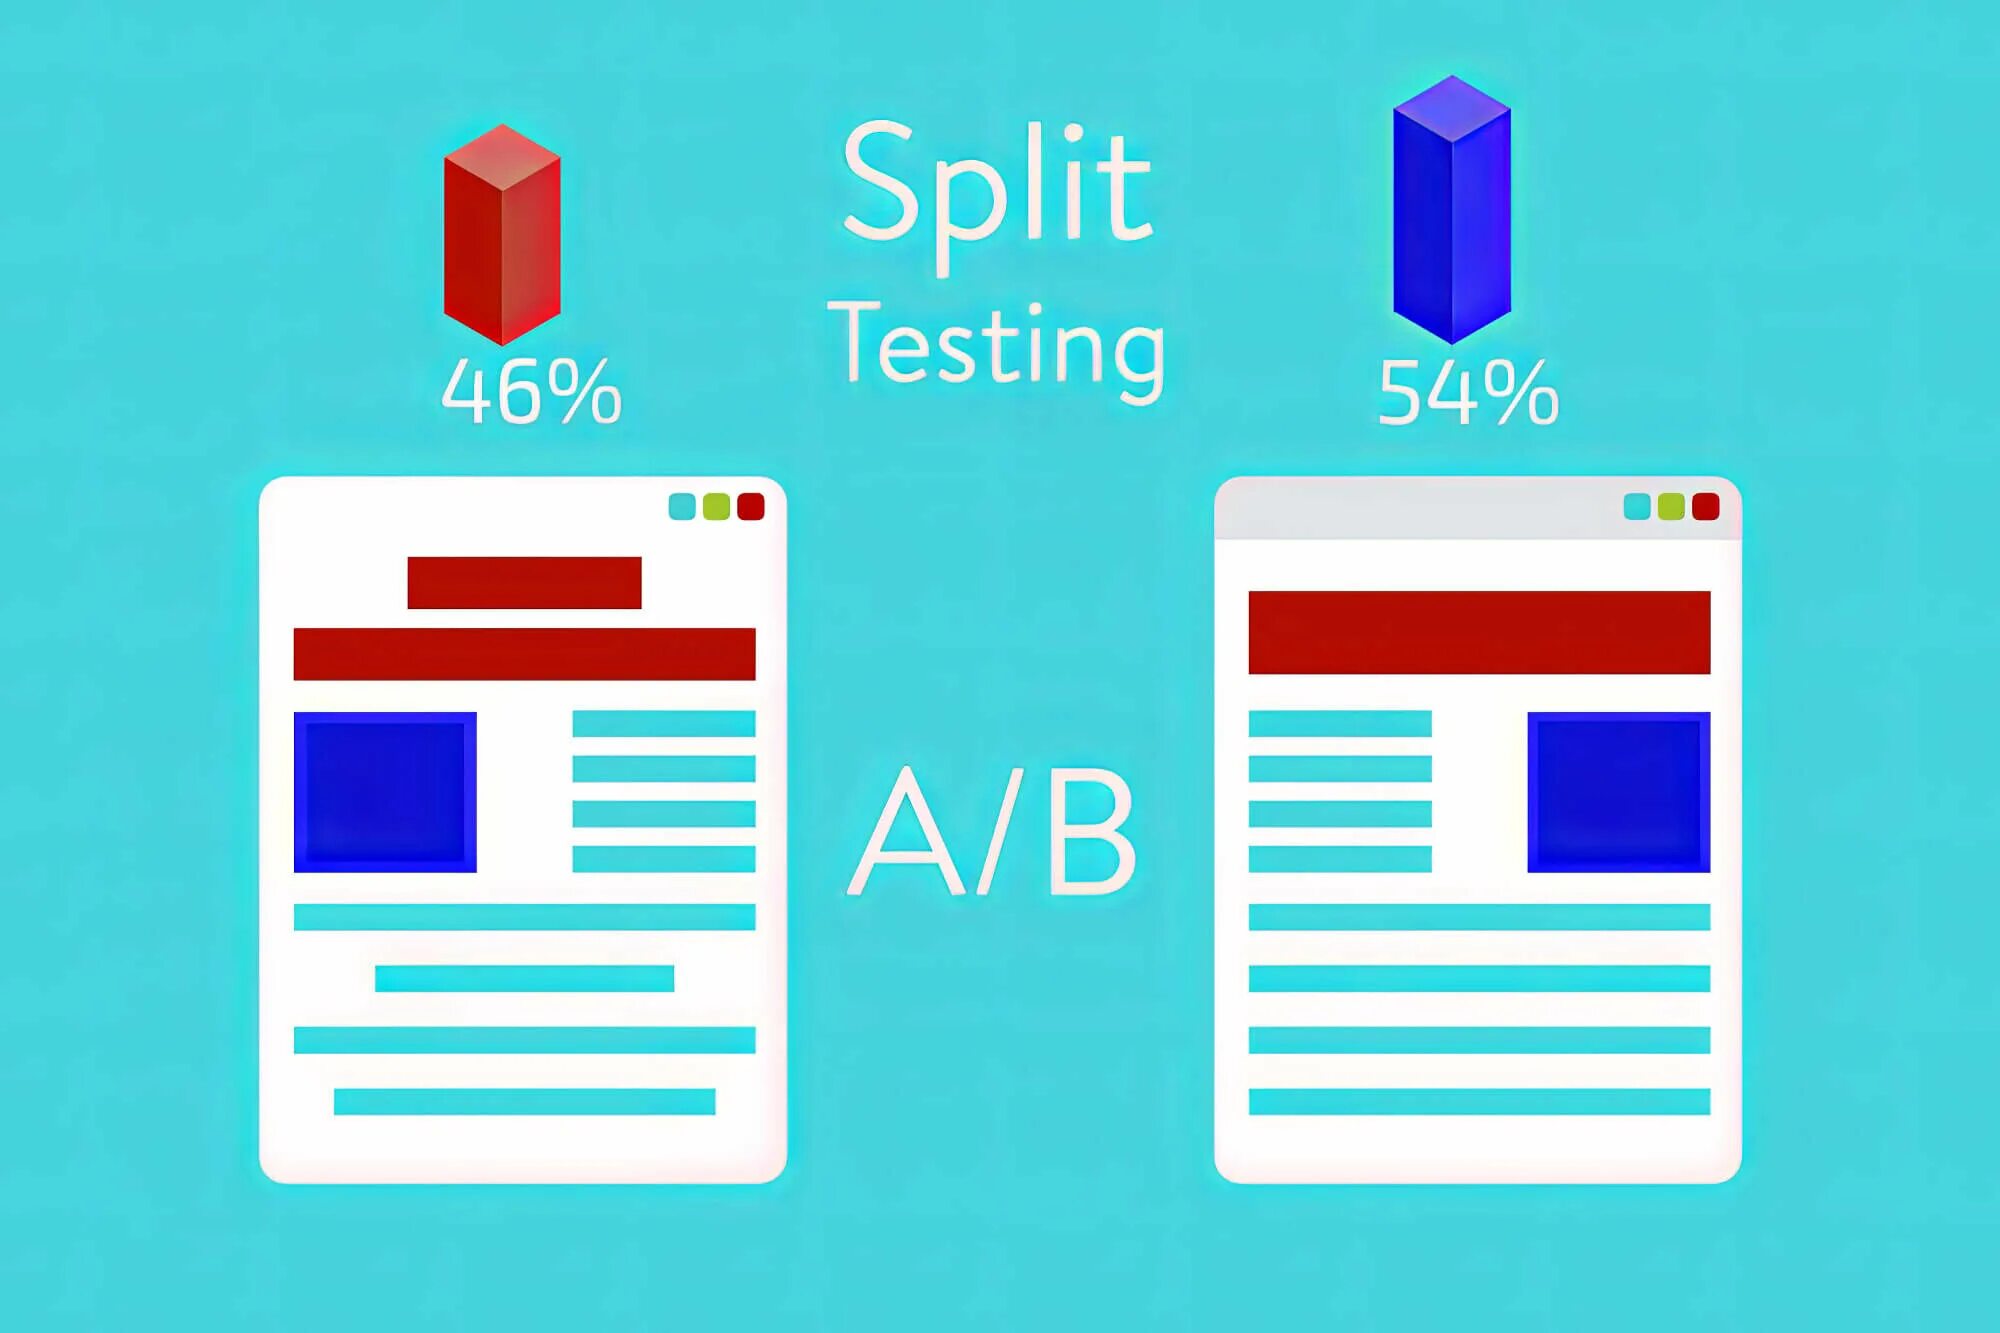 Test my https. Ab тестирование. A/B тест. Ab тестирование пример. Сплит тестирование.